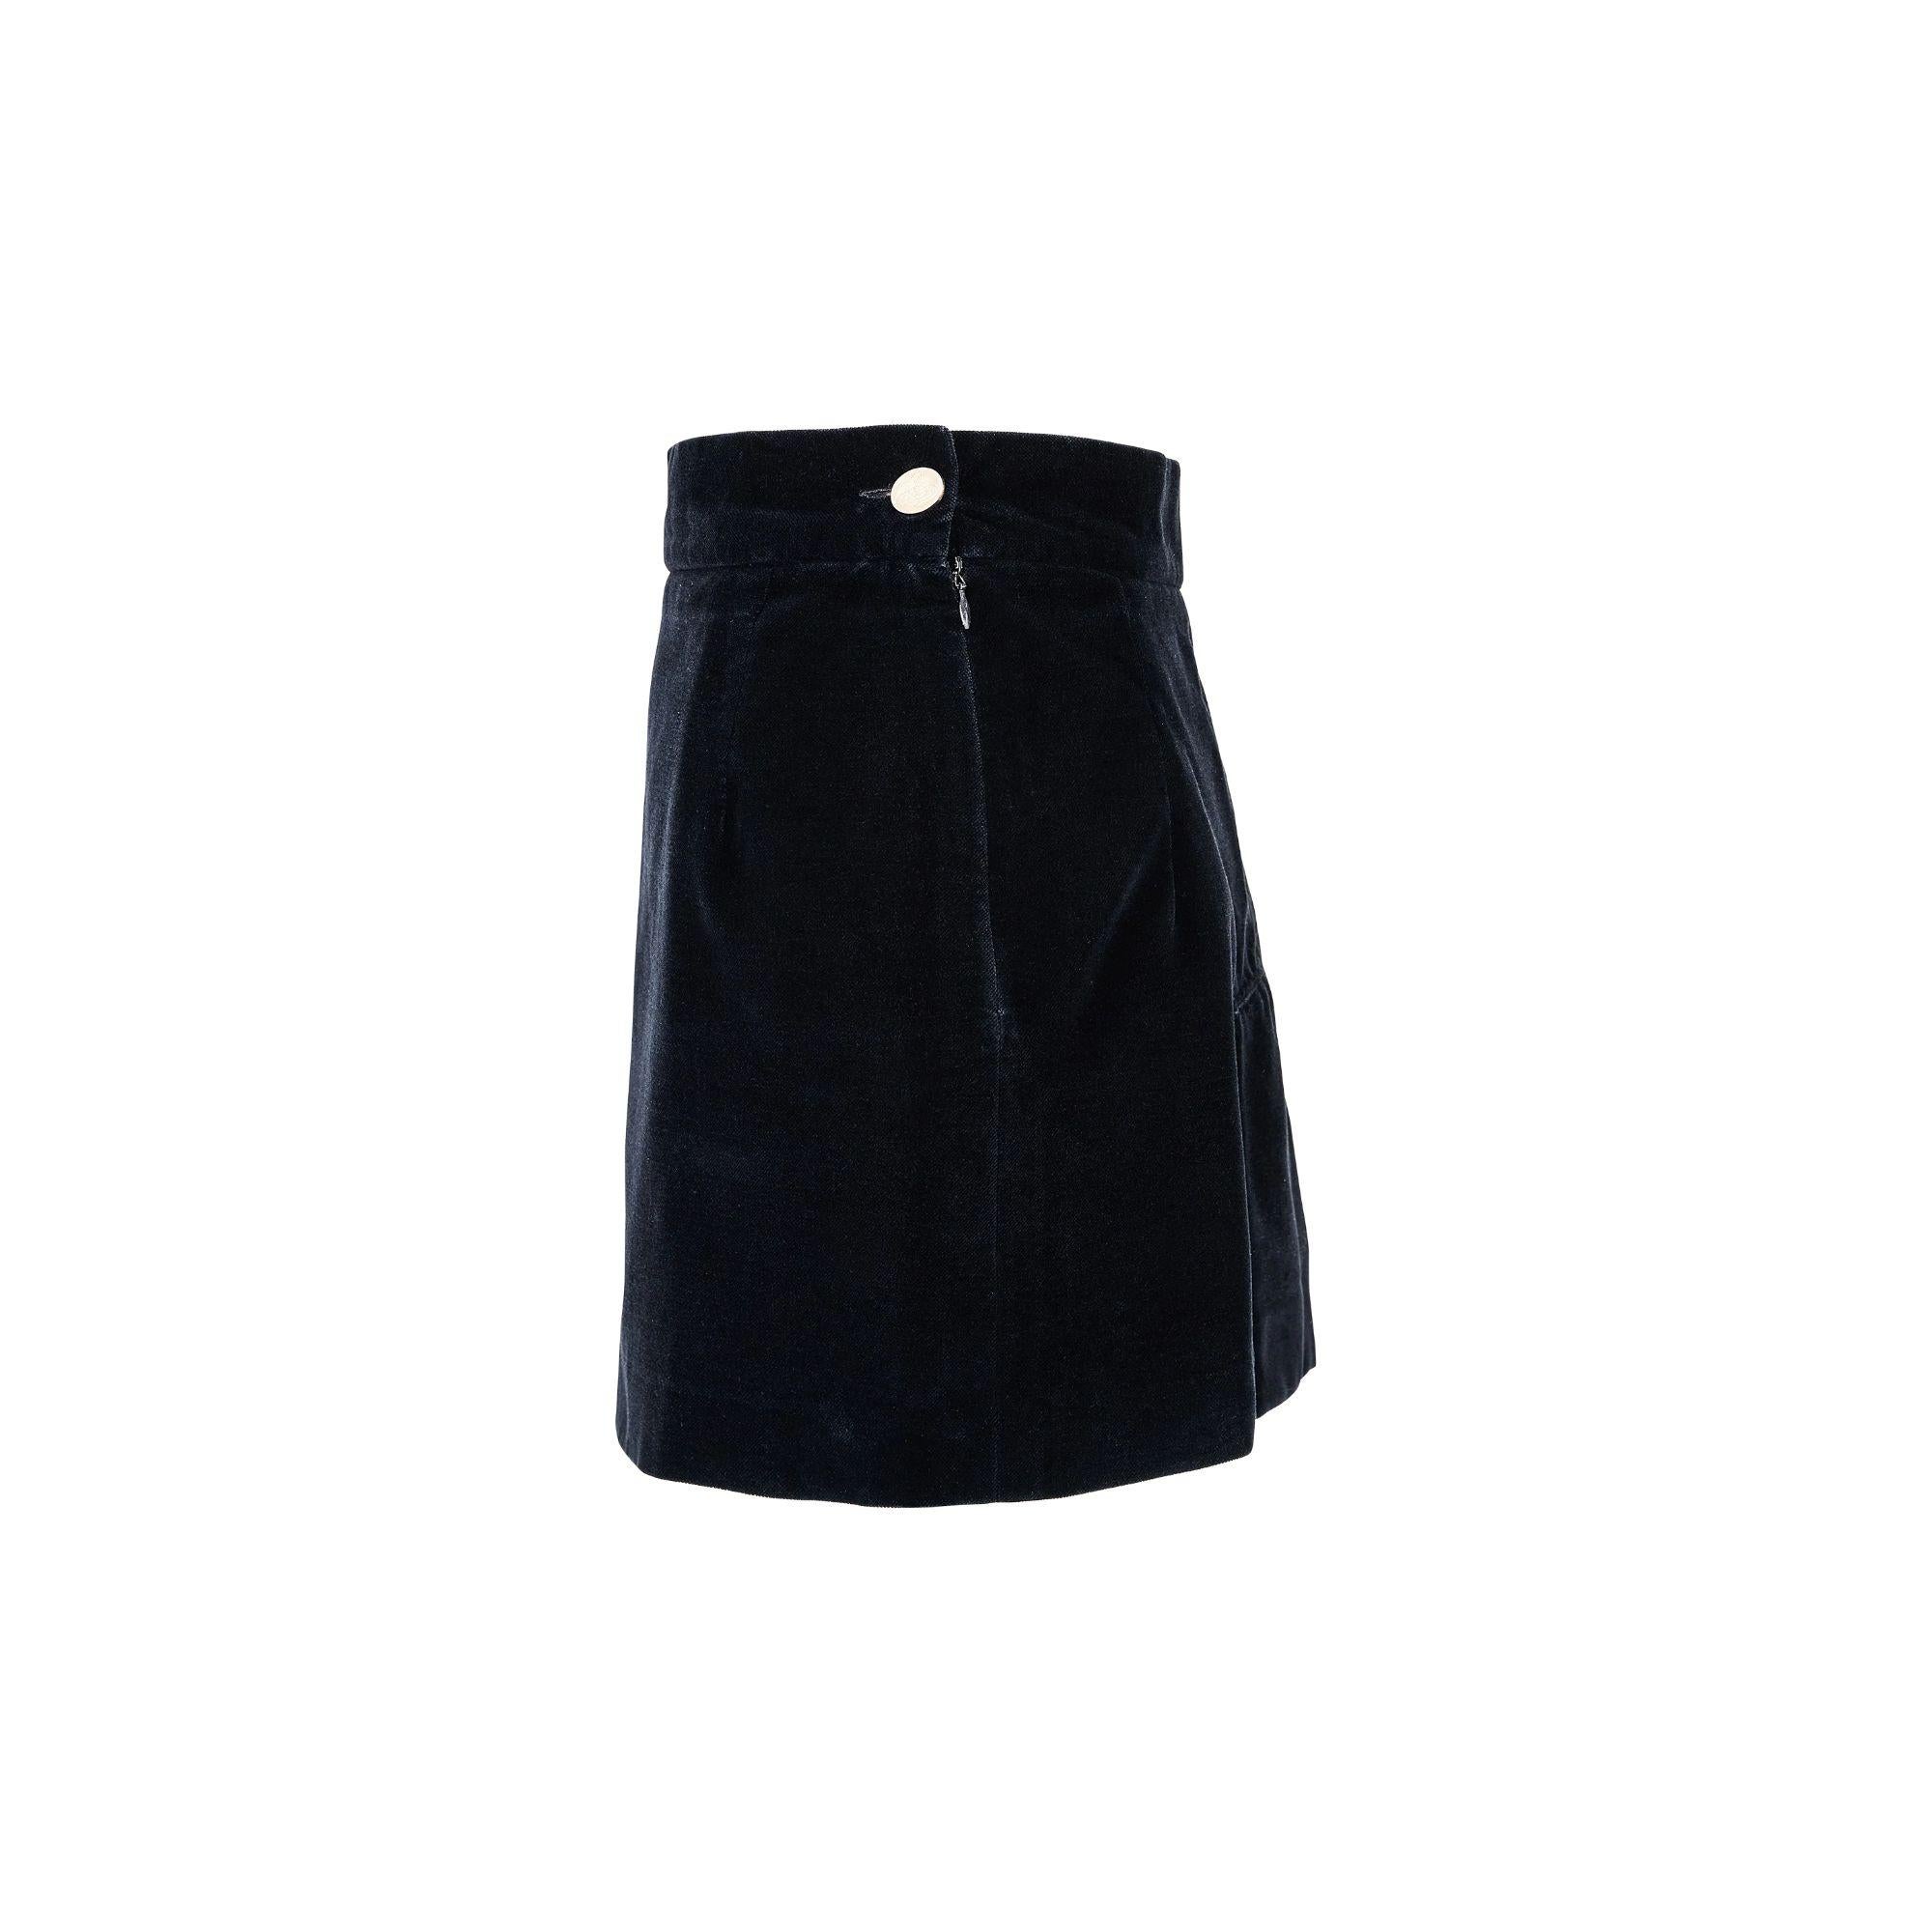 S/S 1995 Vivienne Westwood 'Erotic Zones' Collection Velvet Skirt 6